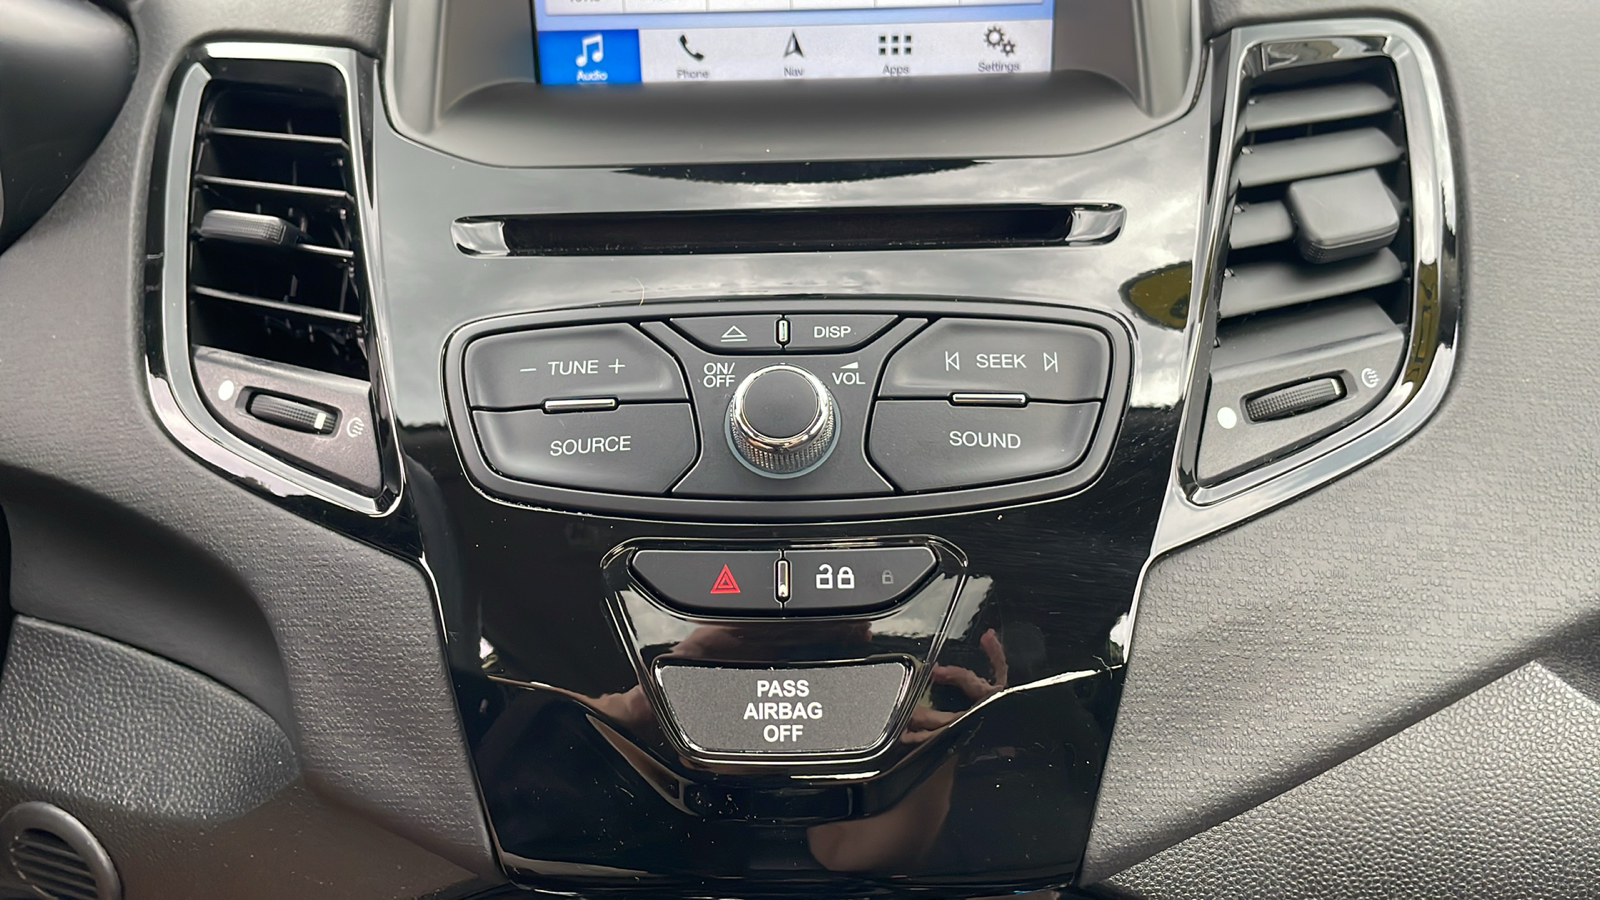 2019 Ford Fiesta ST Line 22